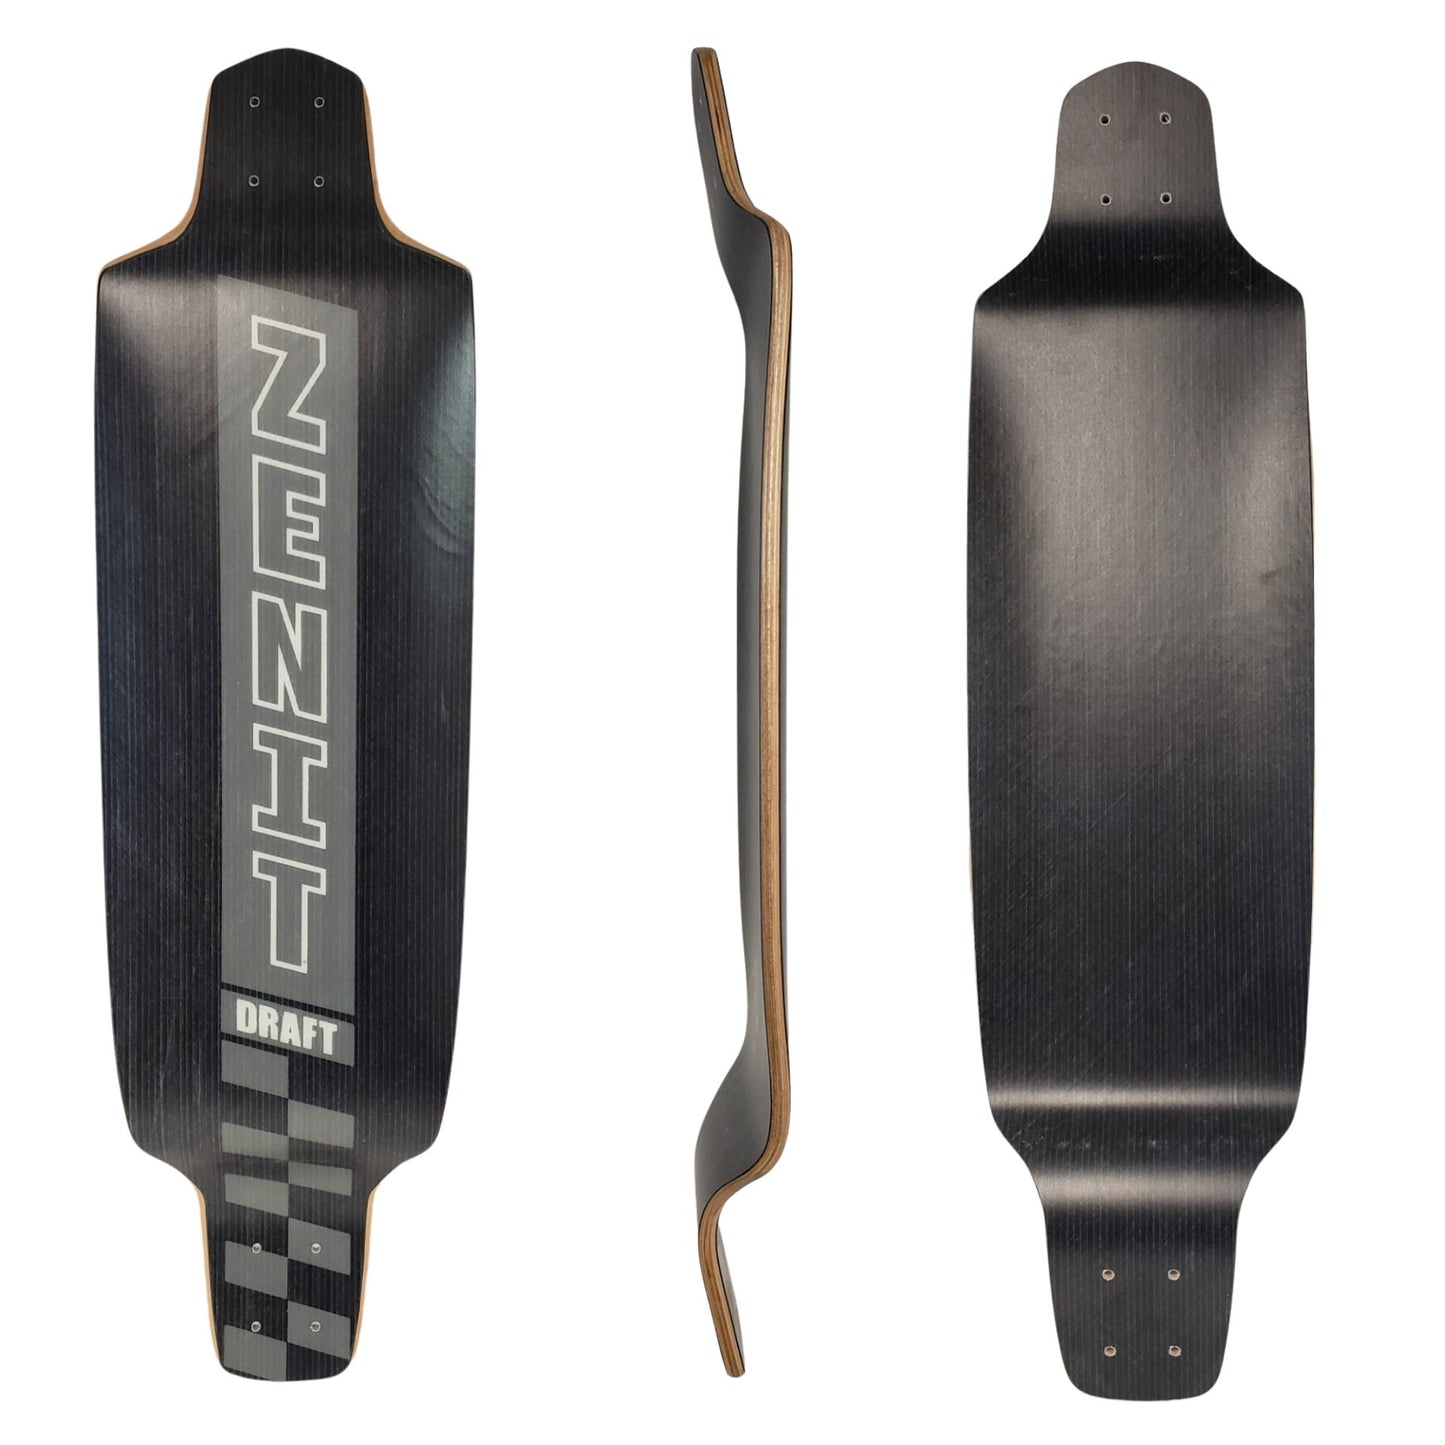 Zenit: Draft Longboard Deck - MUIRSKATE